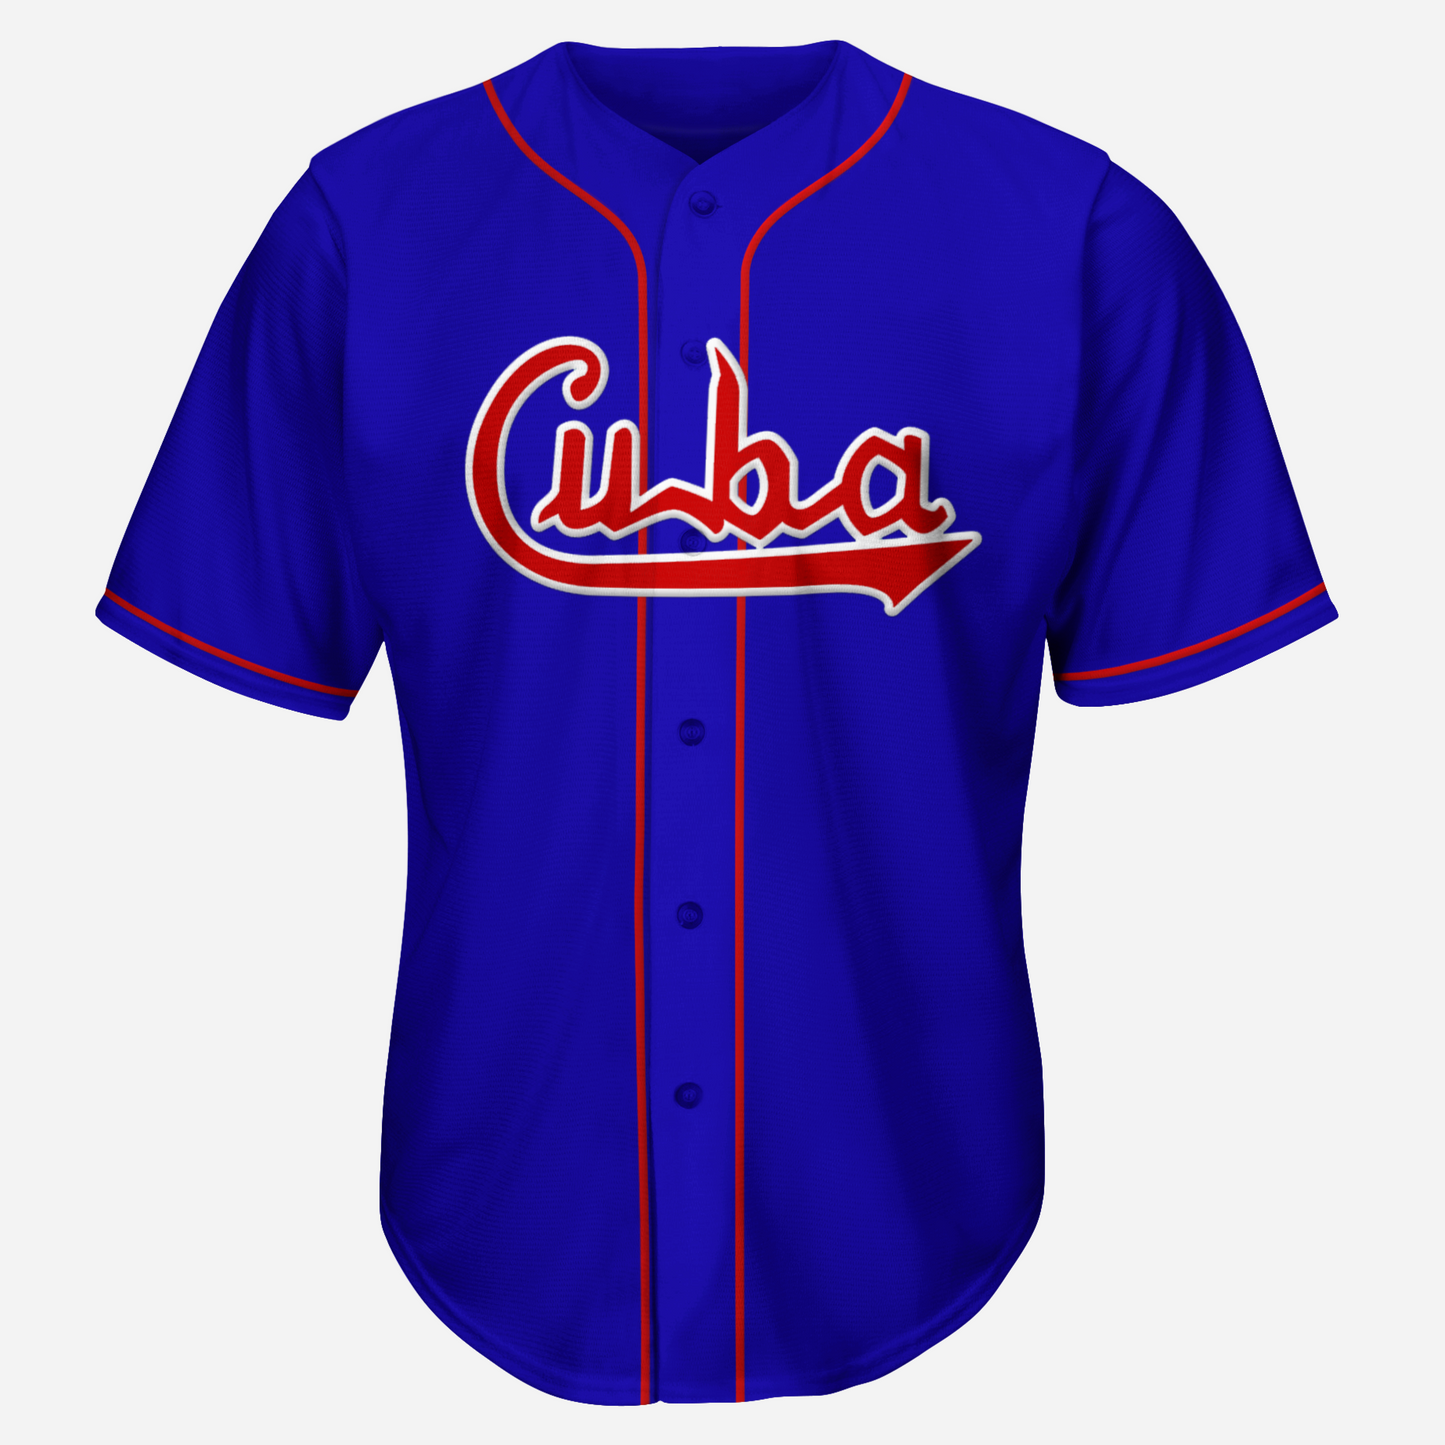 Cuba Baseball Jersey